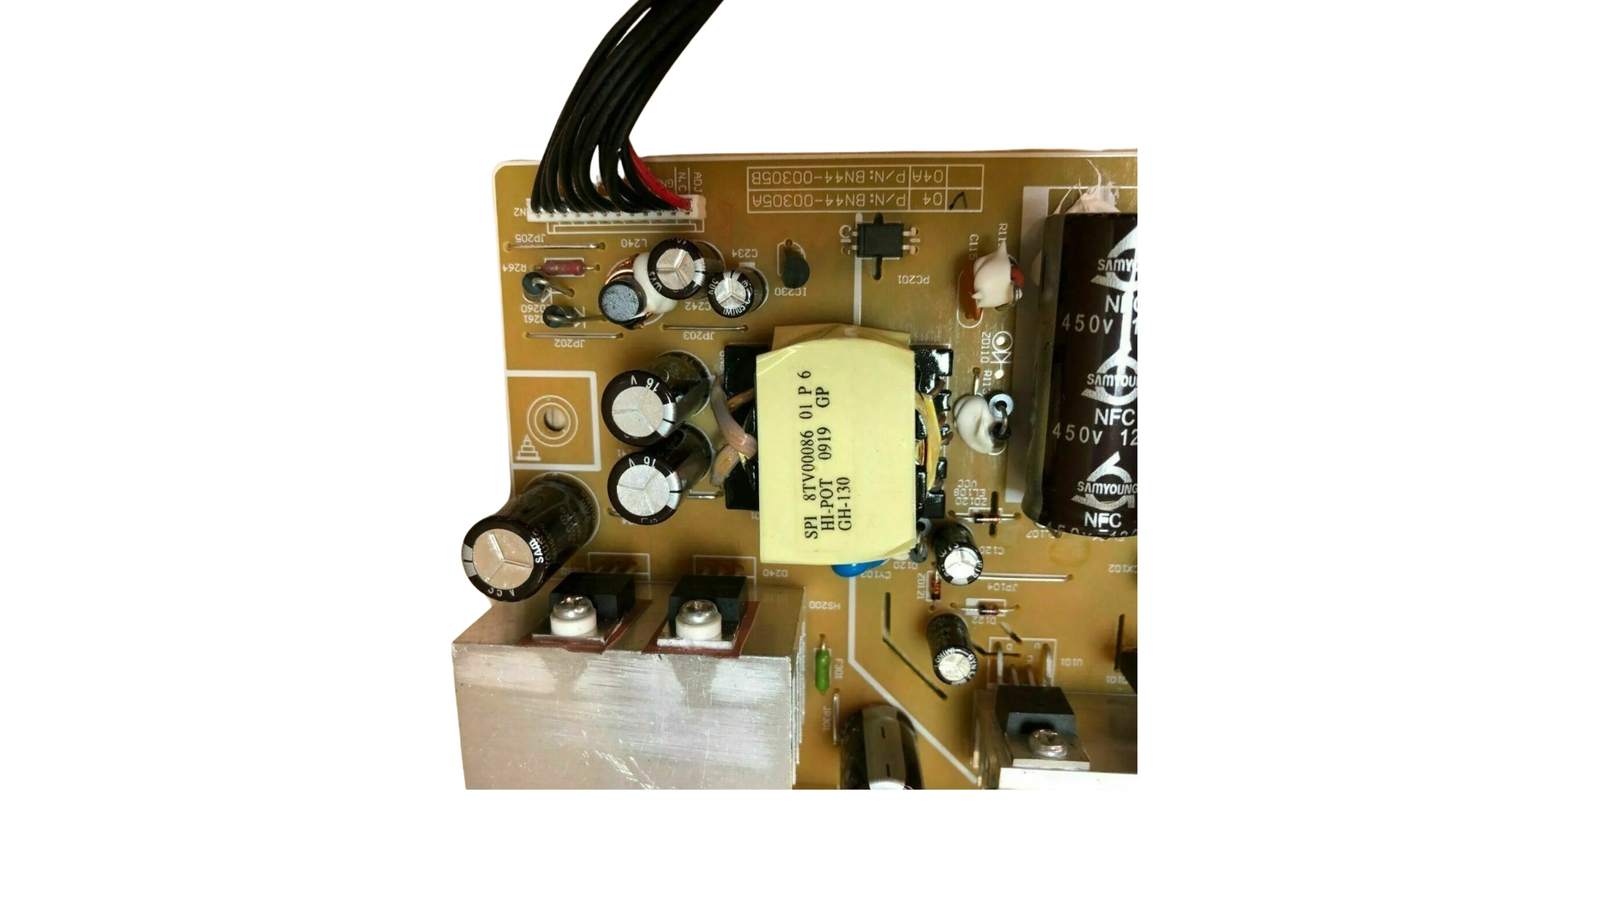 BN44-00305A power supply